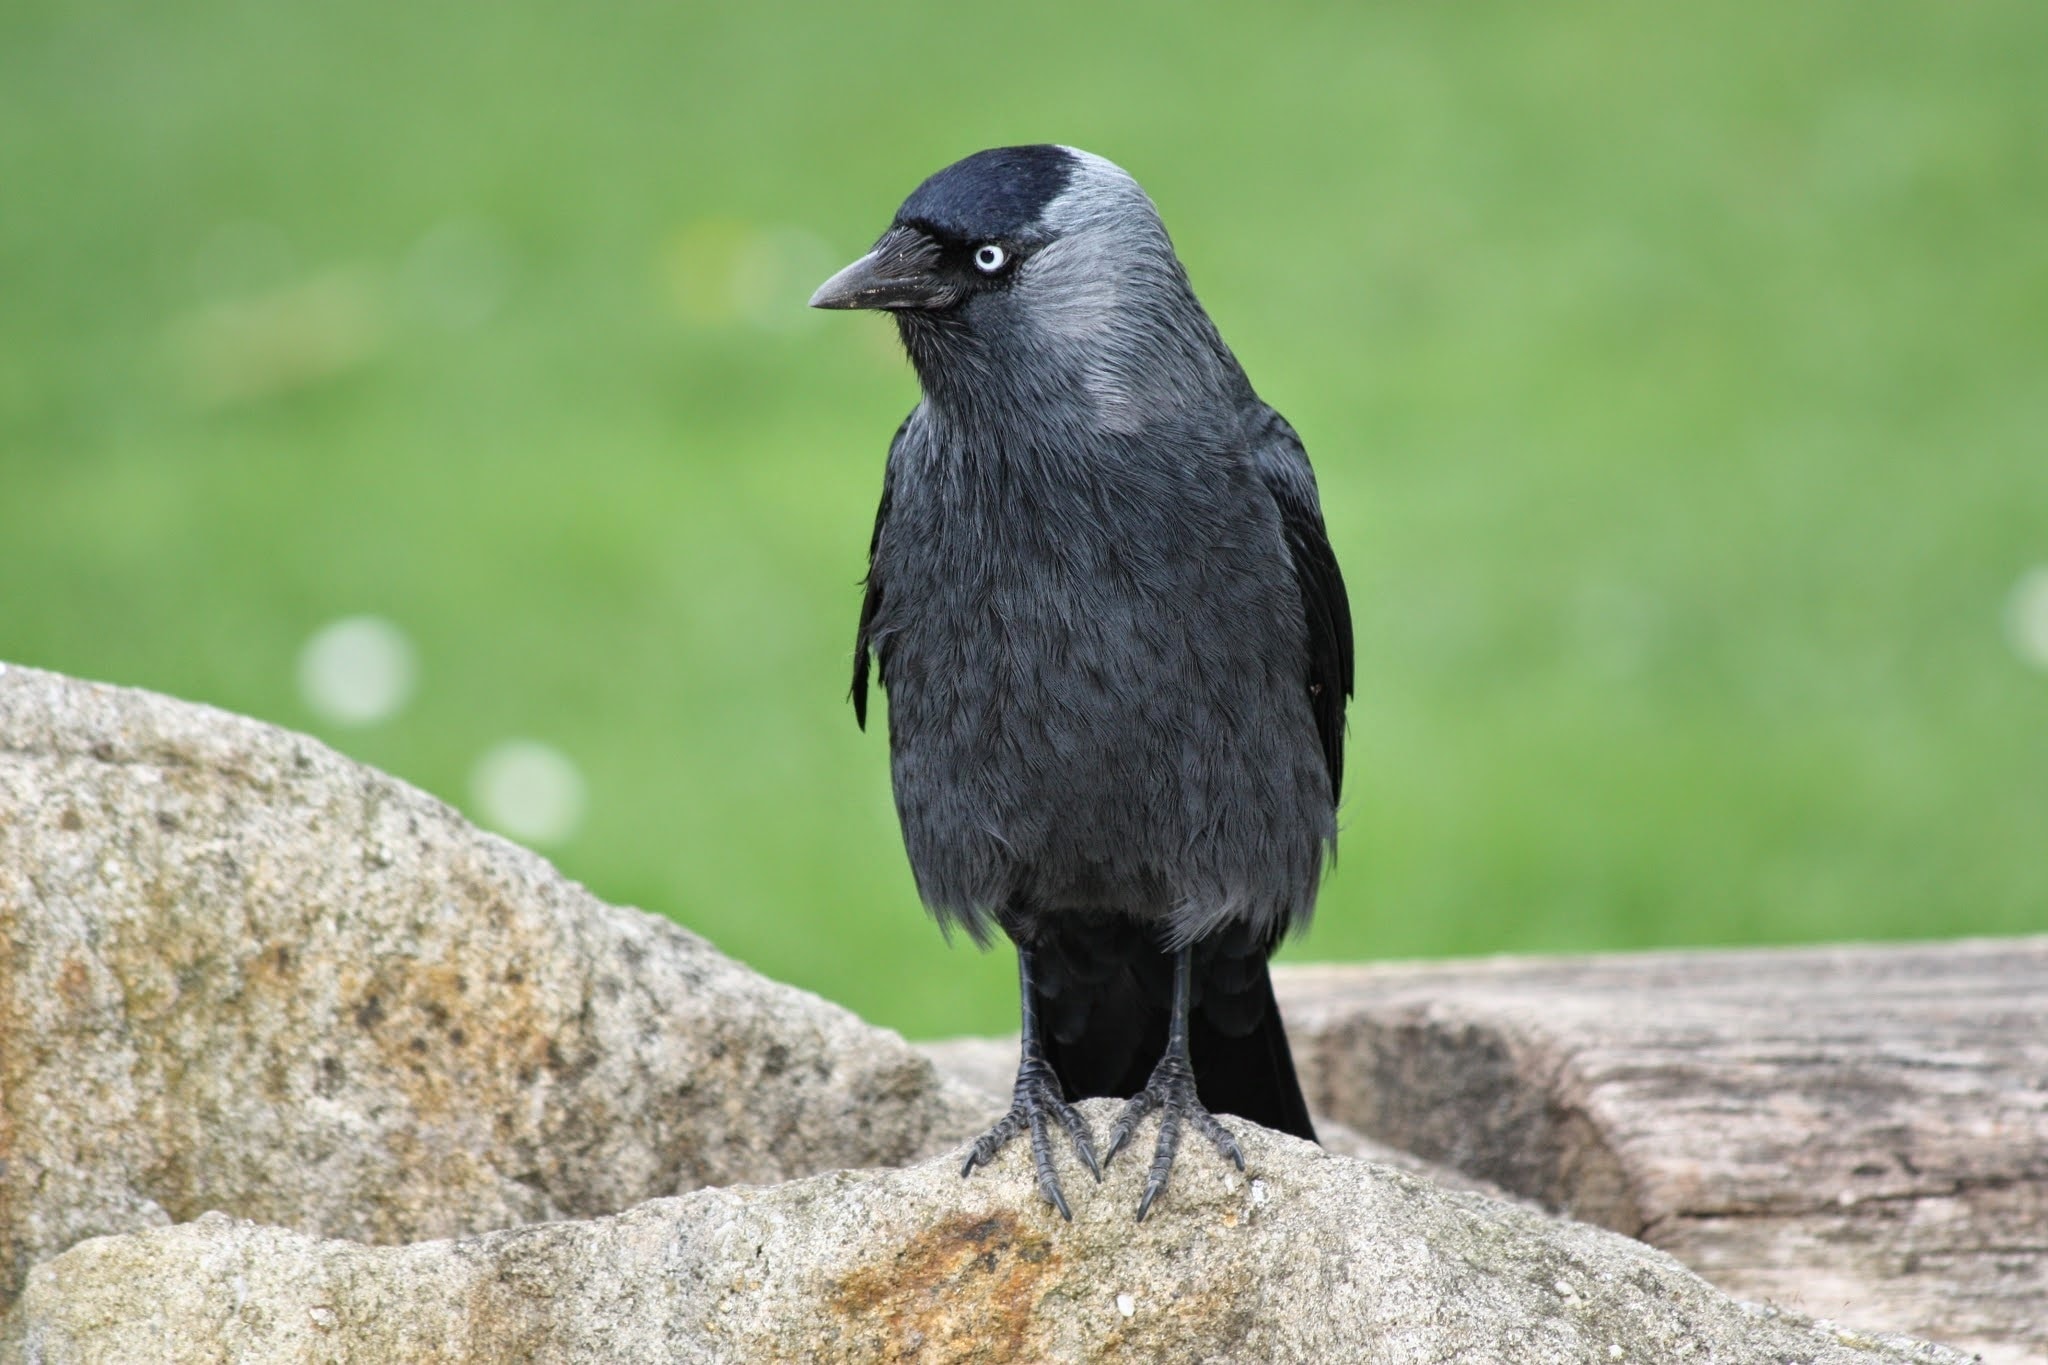 black bird standing on grey stone during daytime